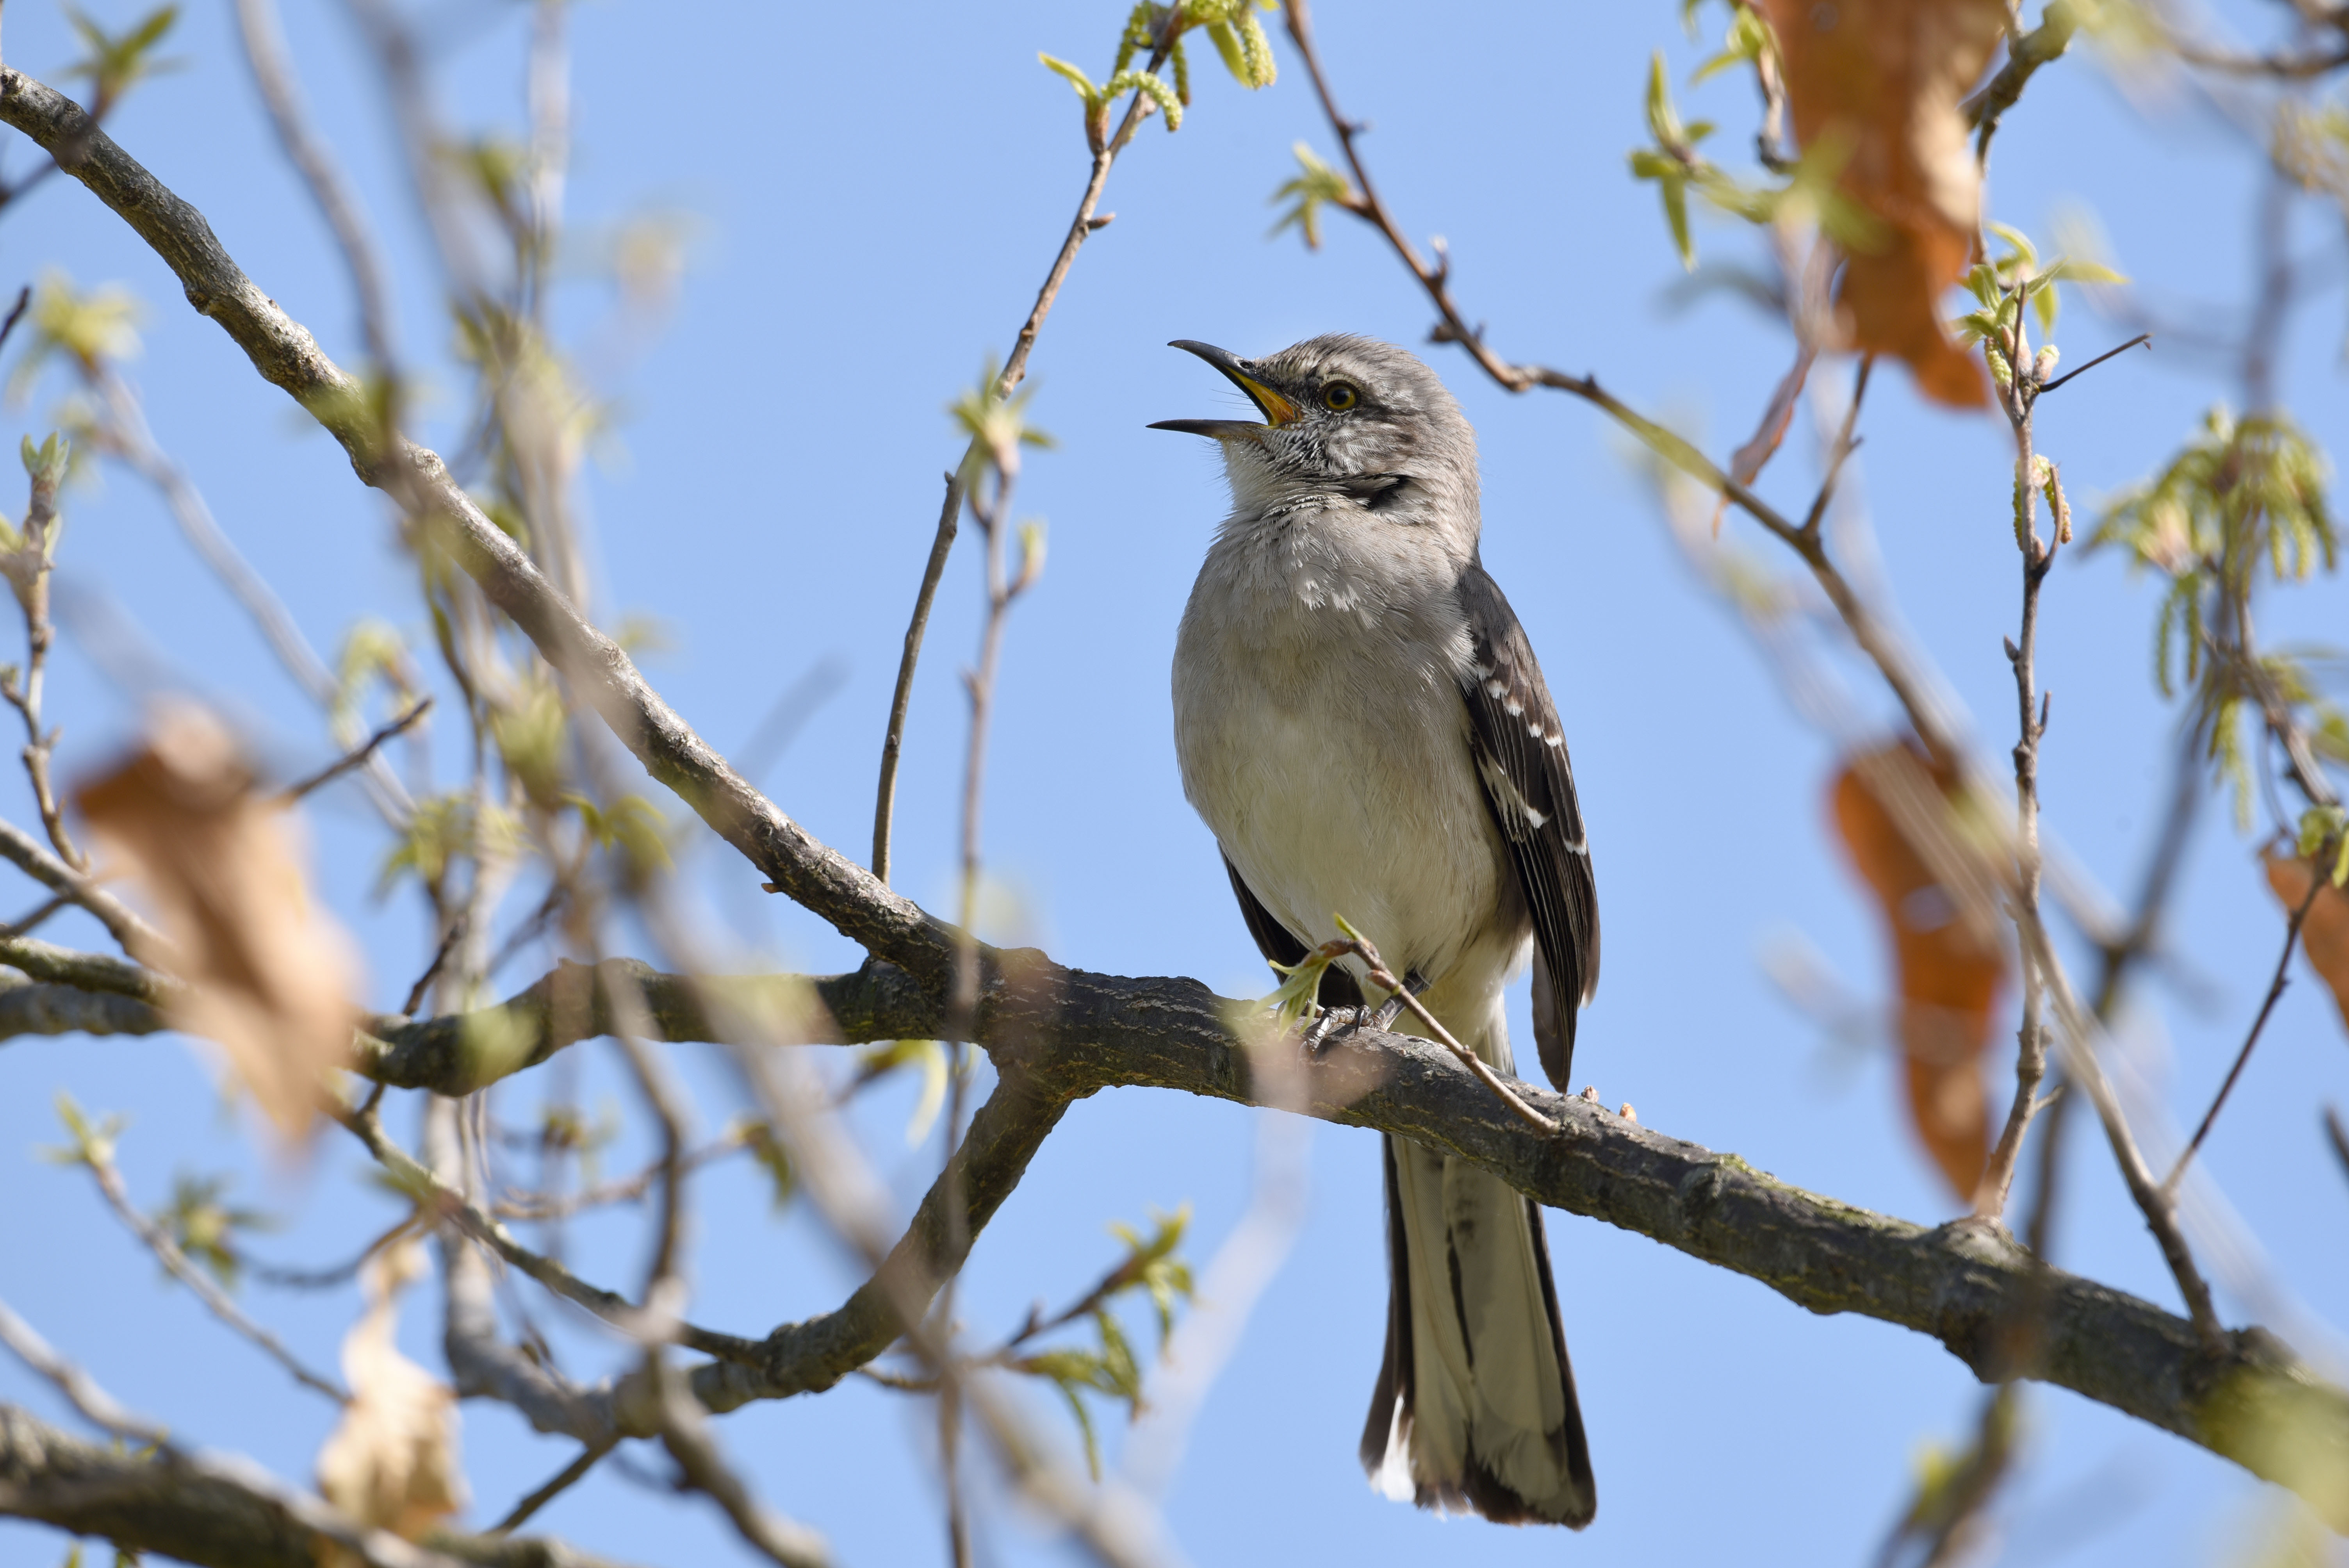 A Northern Mockingbird sings in a tree.